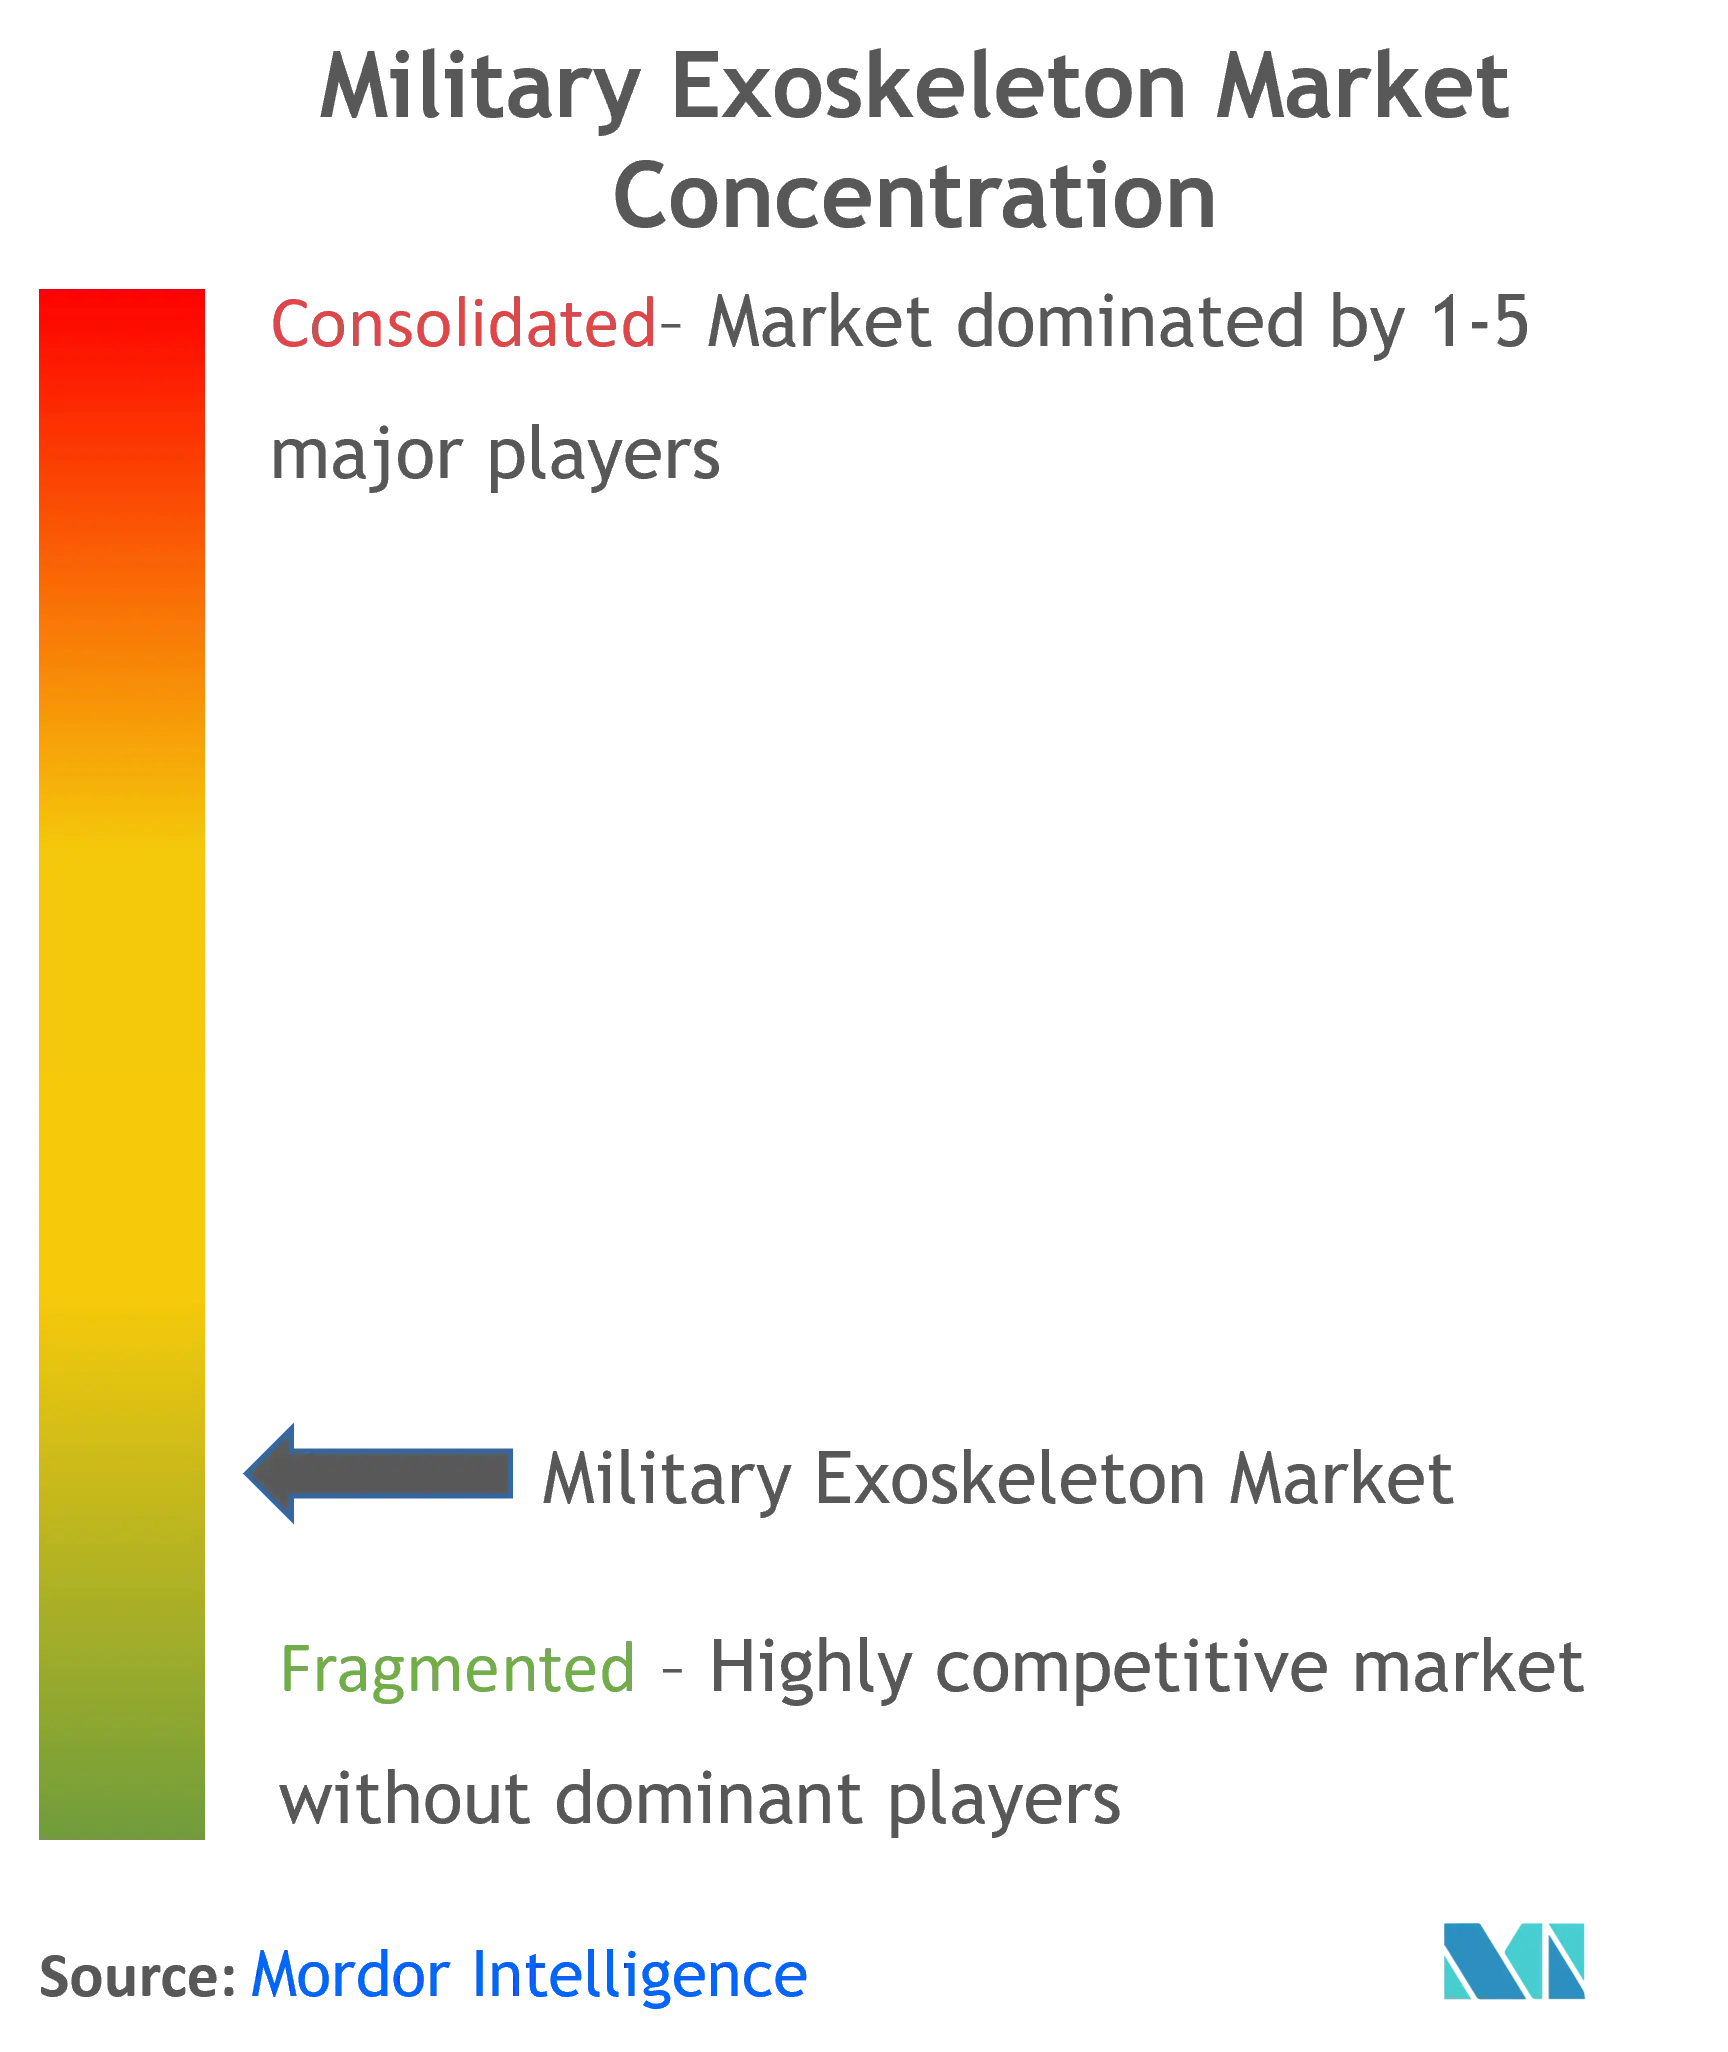 Military Exoskeleton Market Concentration